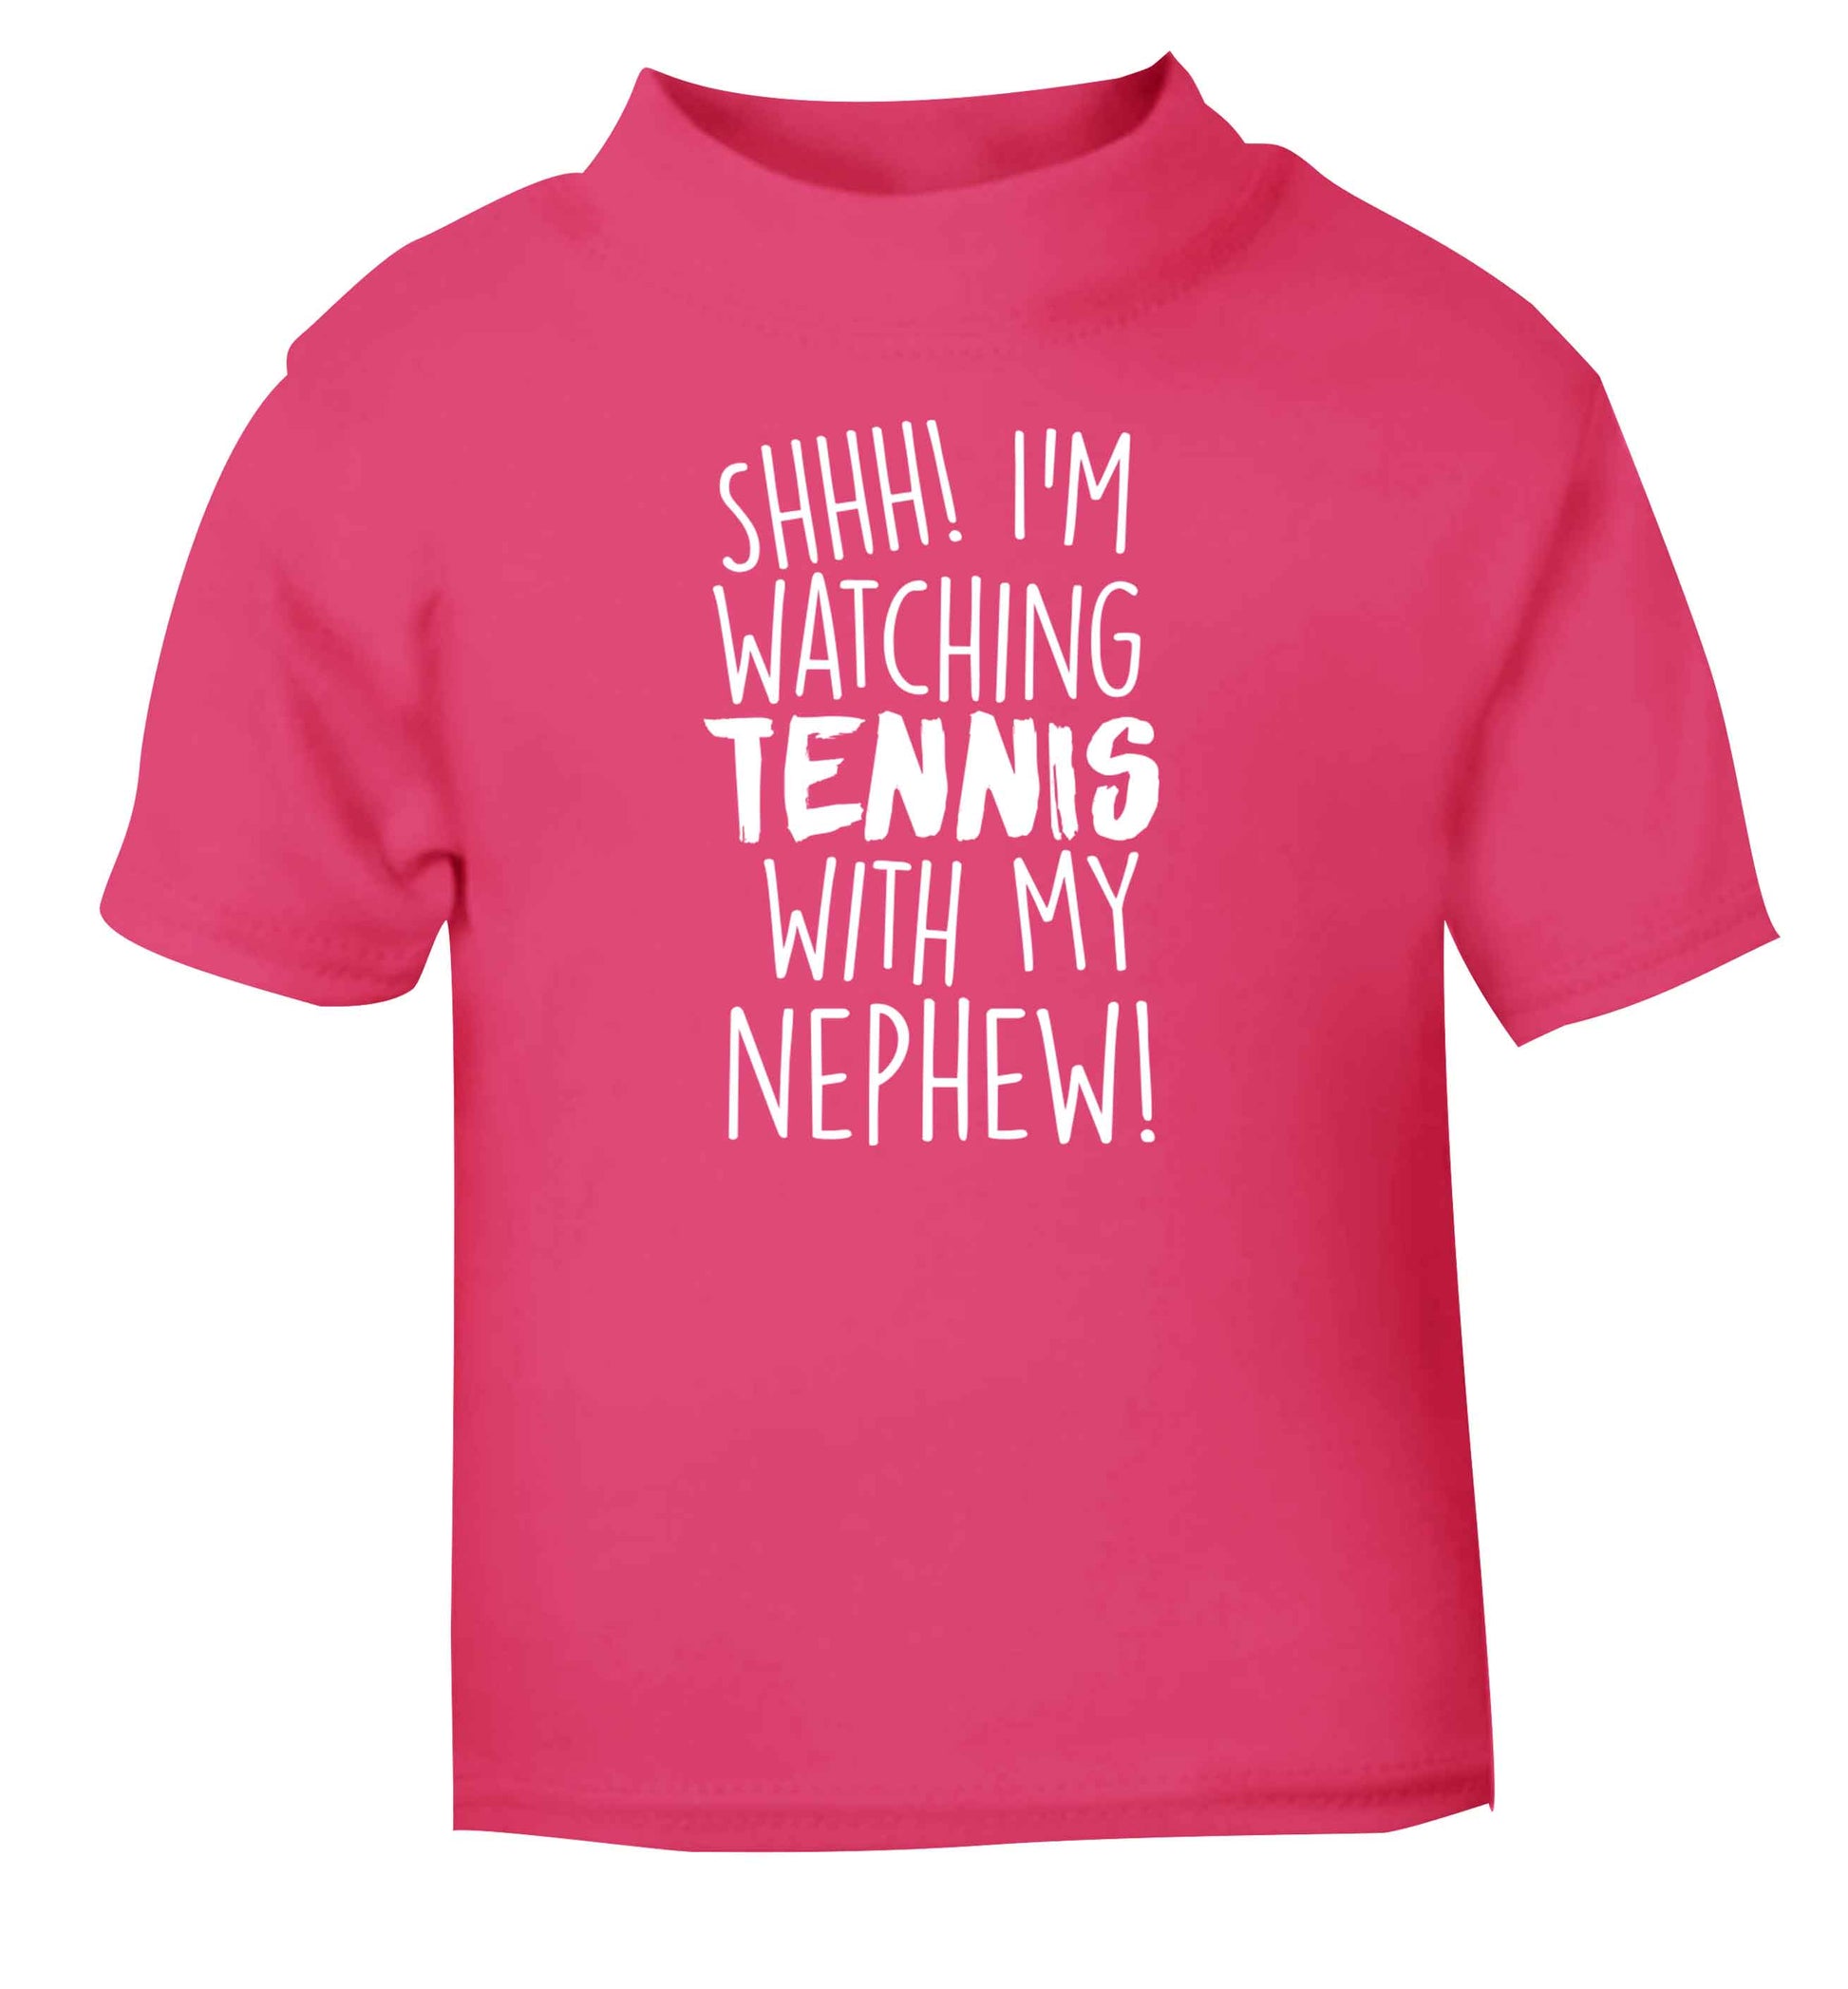 Shh! I'm watching tennis with my nephew! pink Baby Toddler Tshirt 2 Years